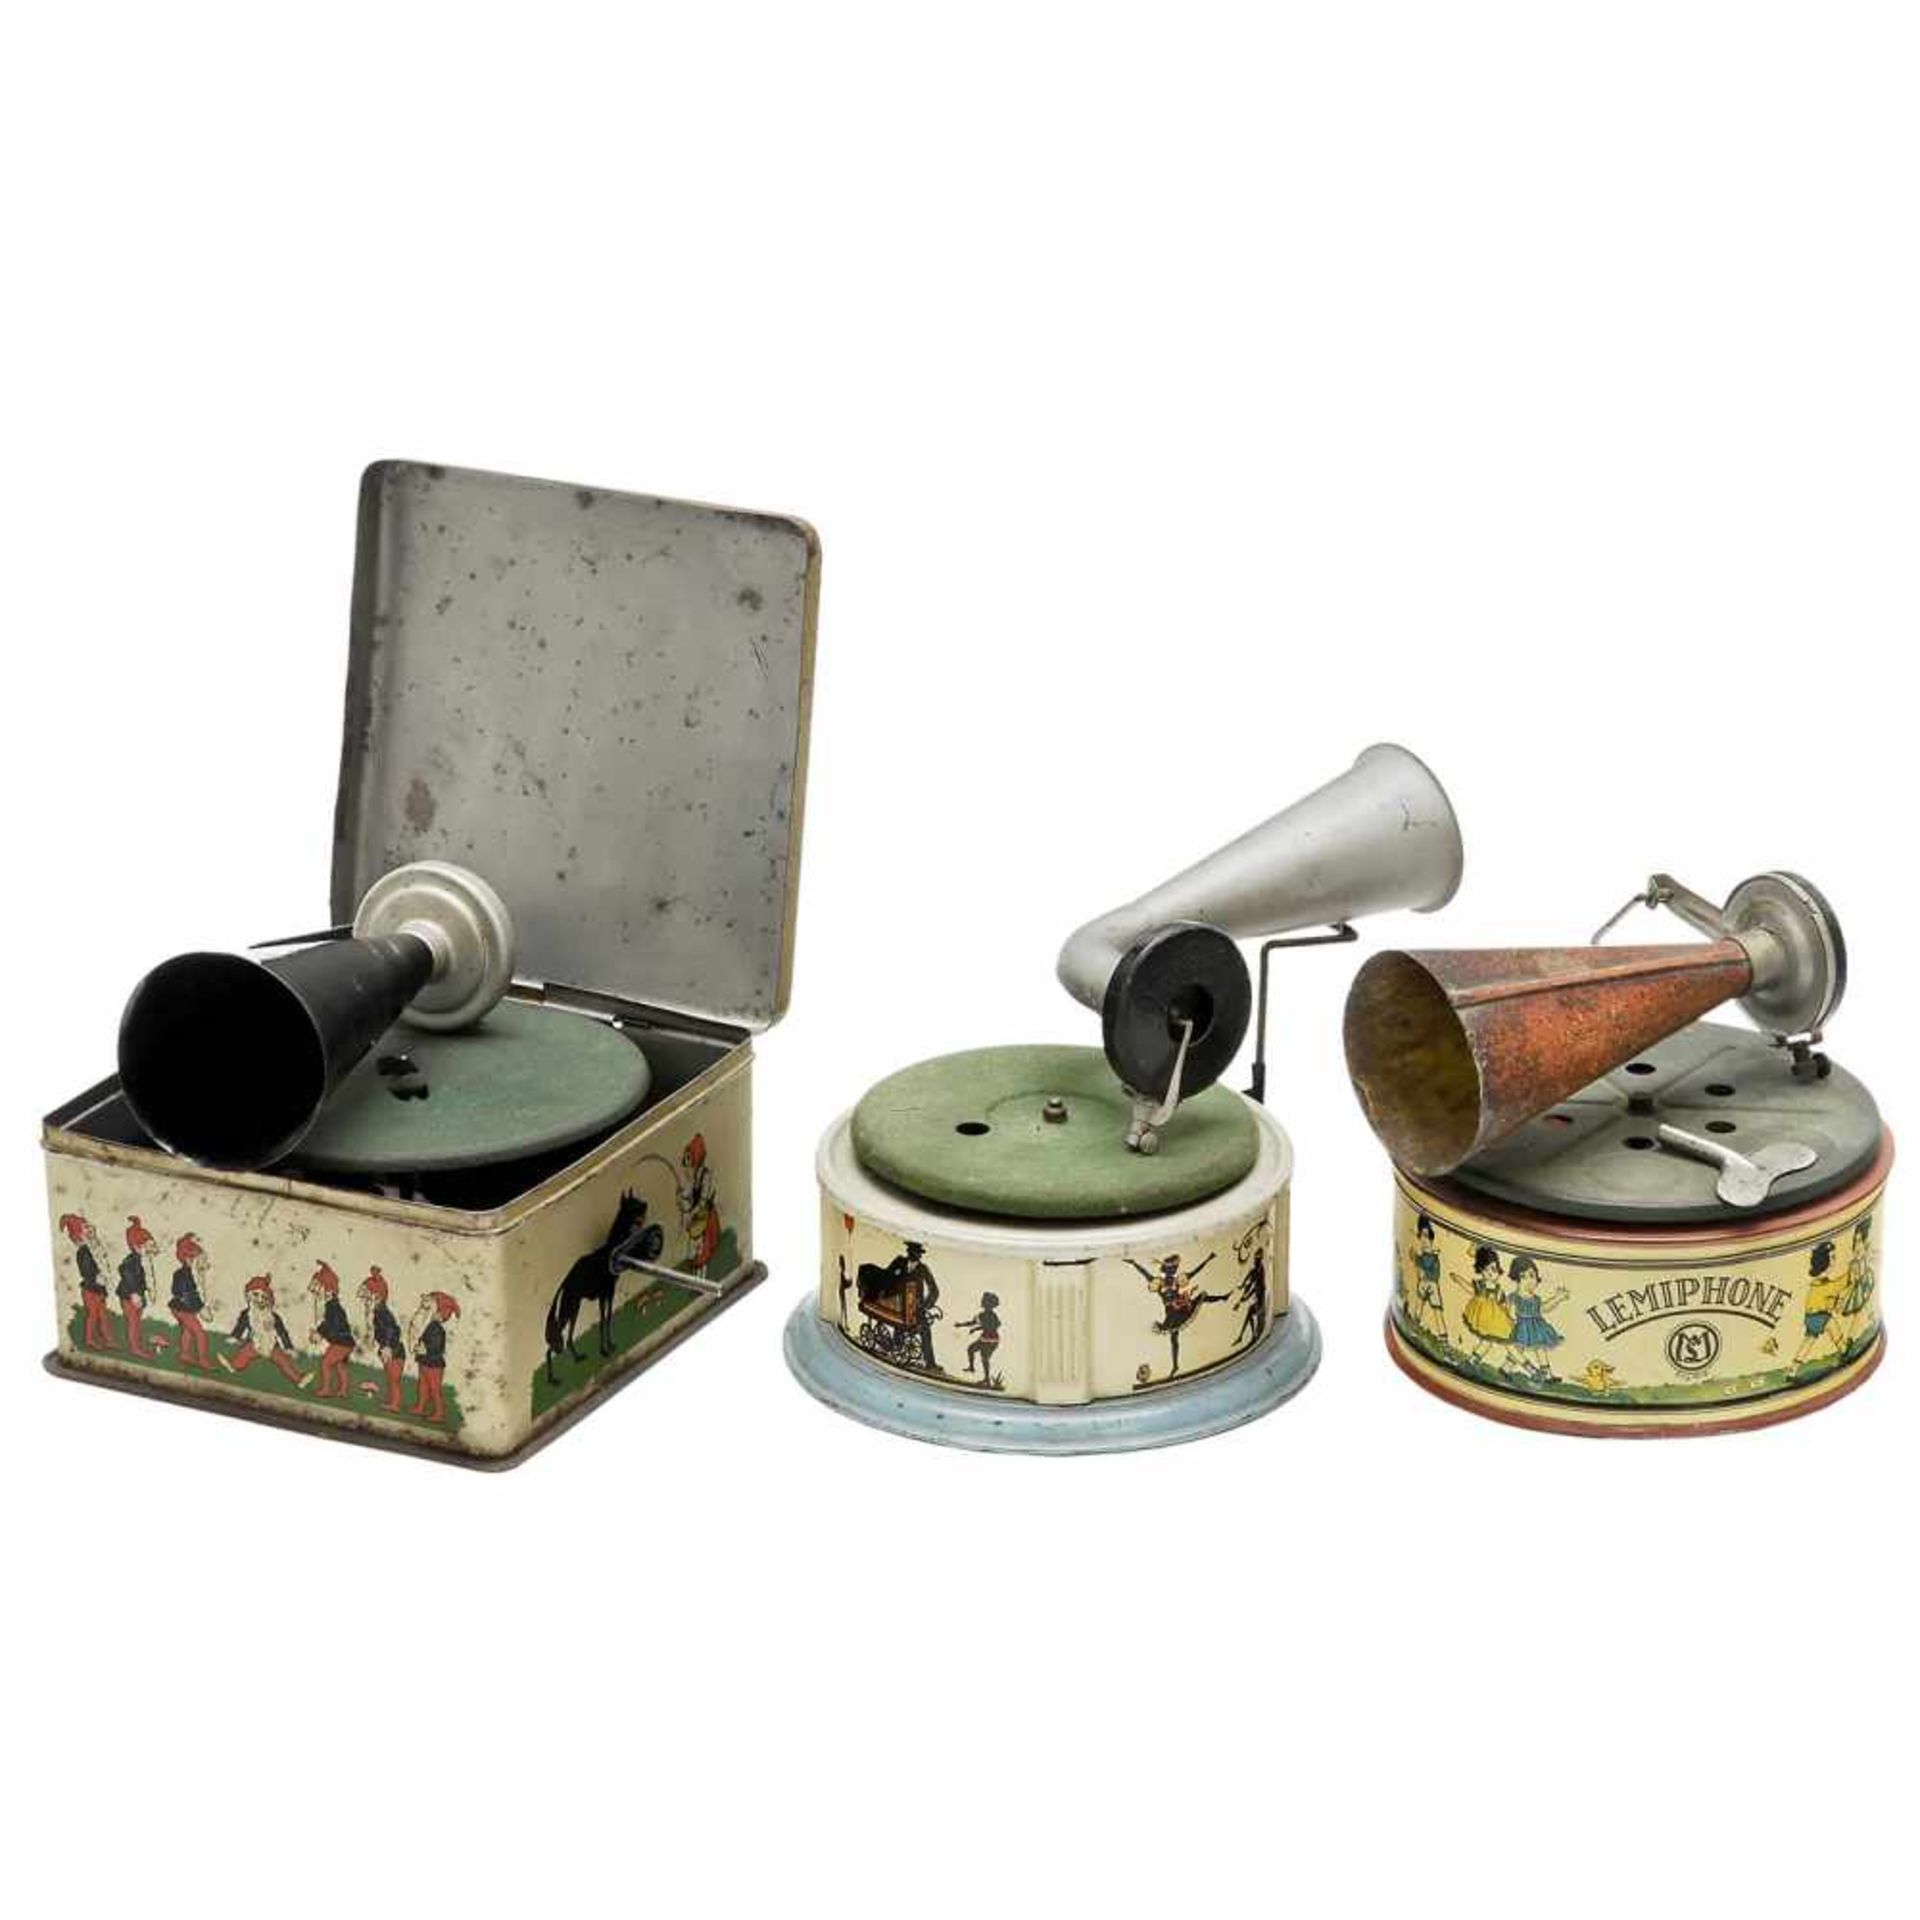 3 Toy Gramophones, c. 19251) Lemiphone, Leonhard Müller, Nuremberg, Germany. Lithographed tin,